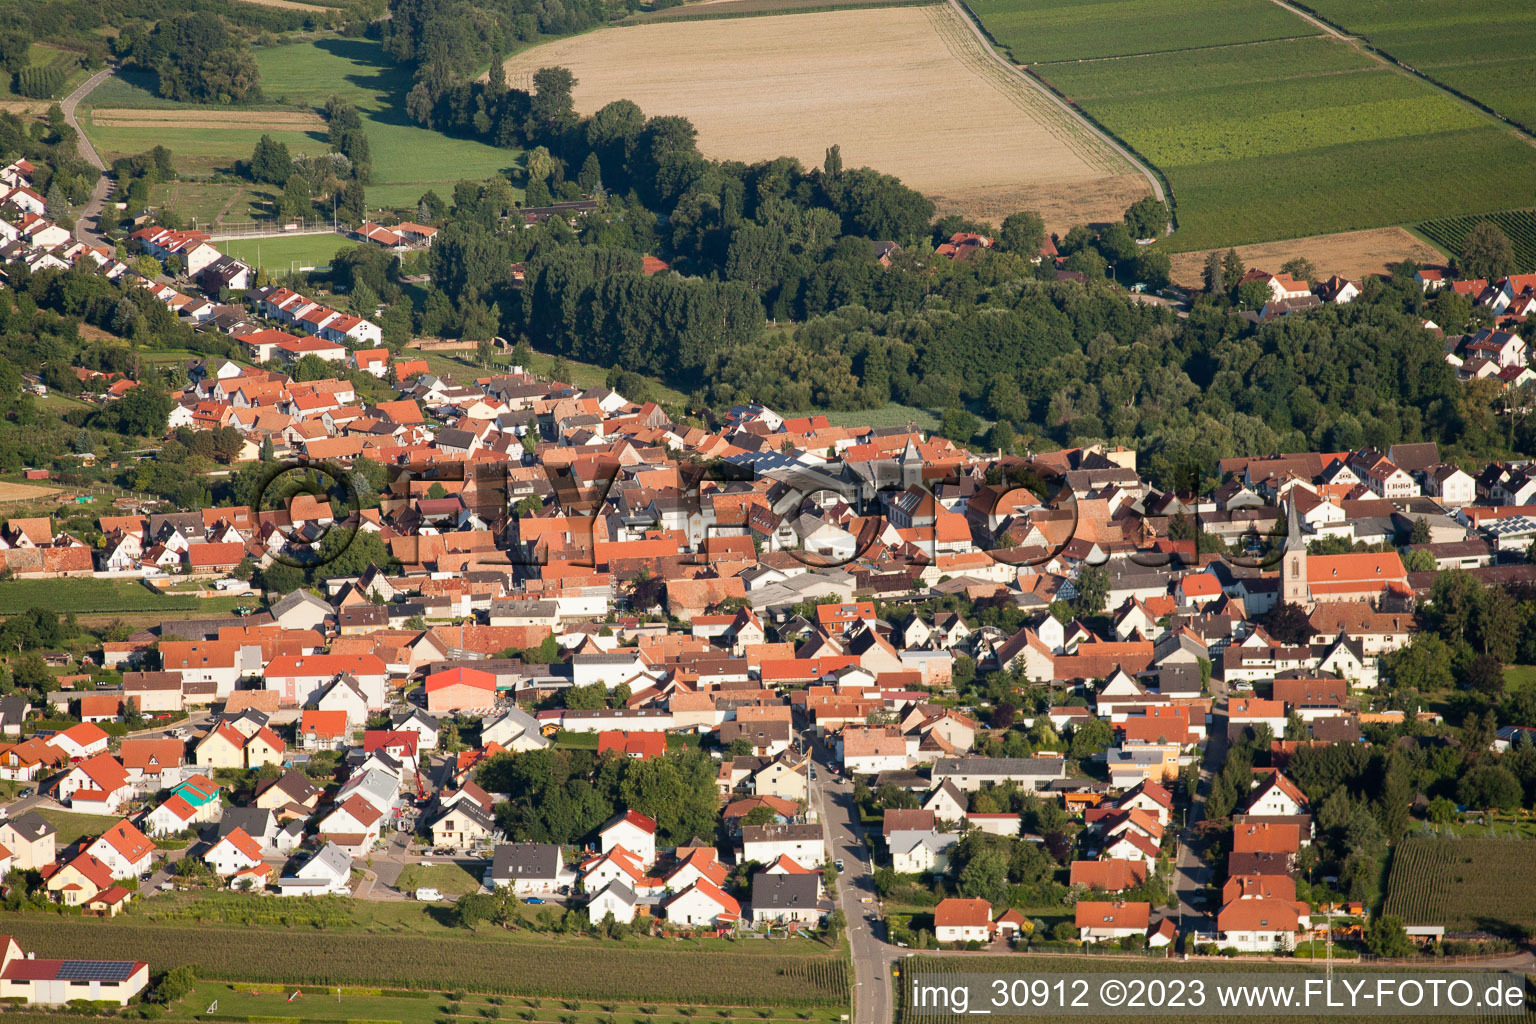 District Mühlhofen in Billigheim-Ingenheim in the state Rhineland-Palatinate, Germany viewn from the air